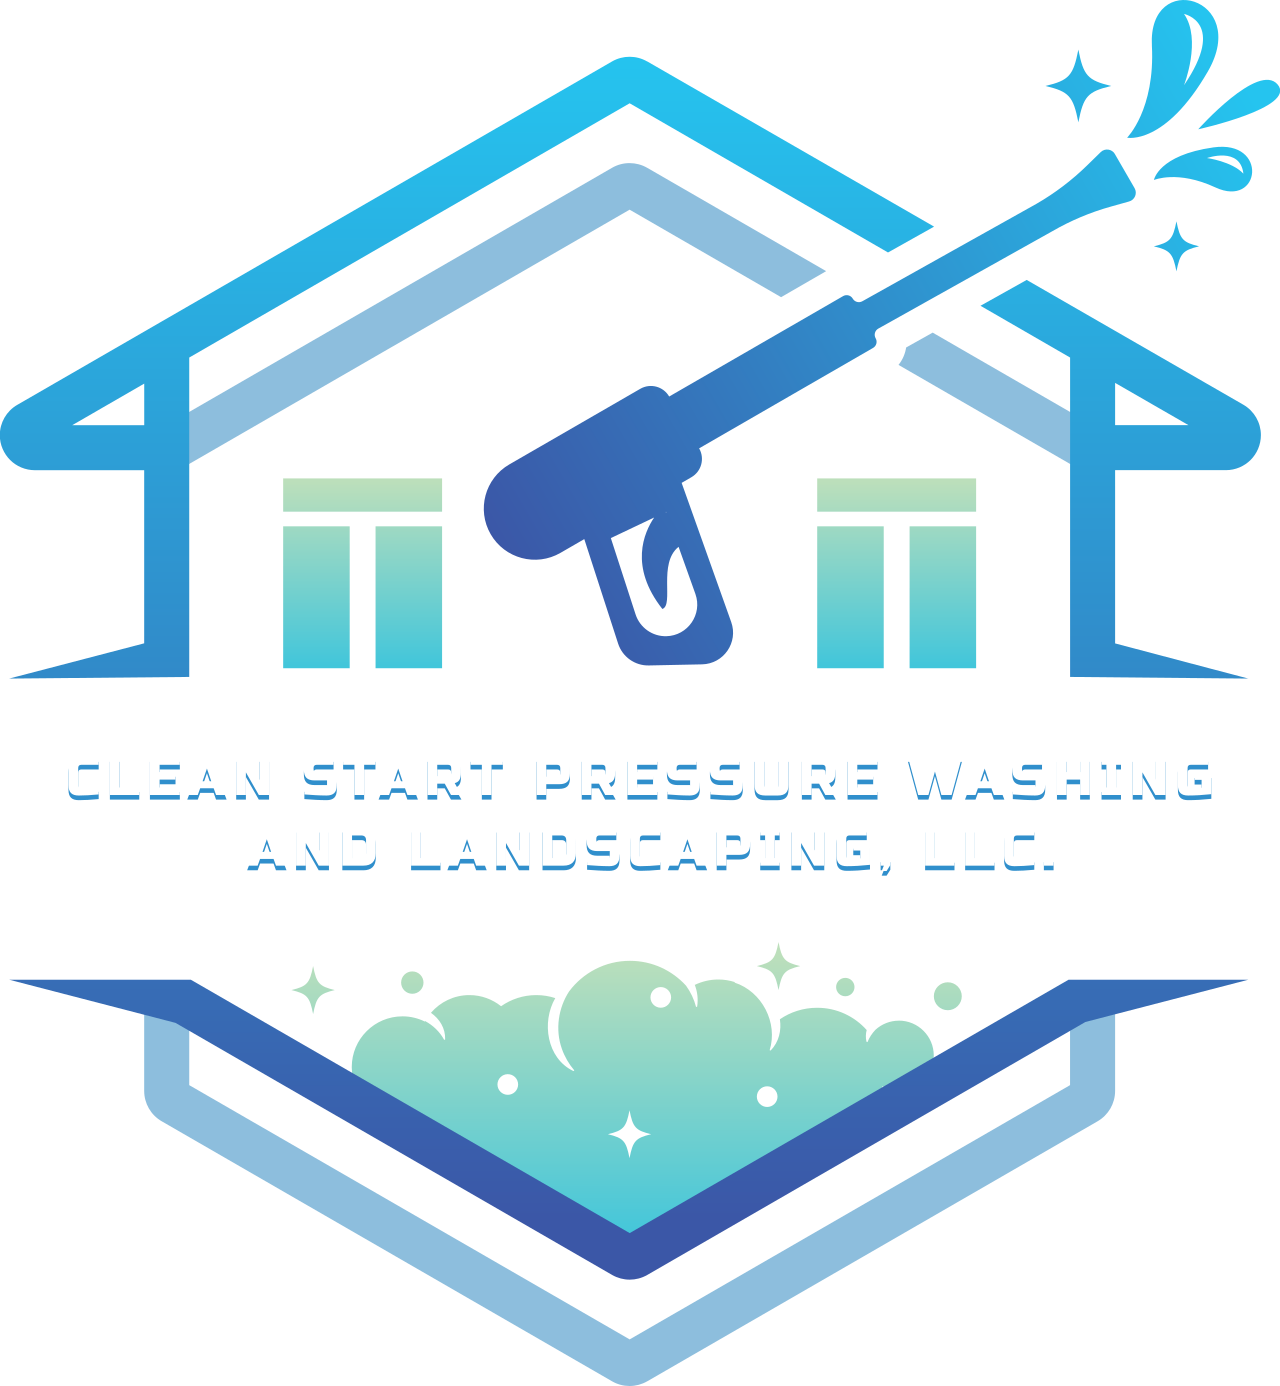 Clean start pressure washing
 and landscaping, LLC.'s logo